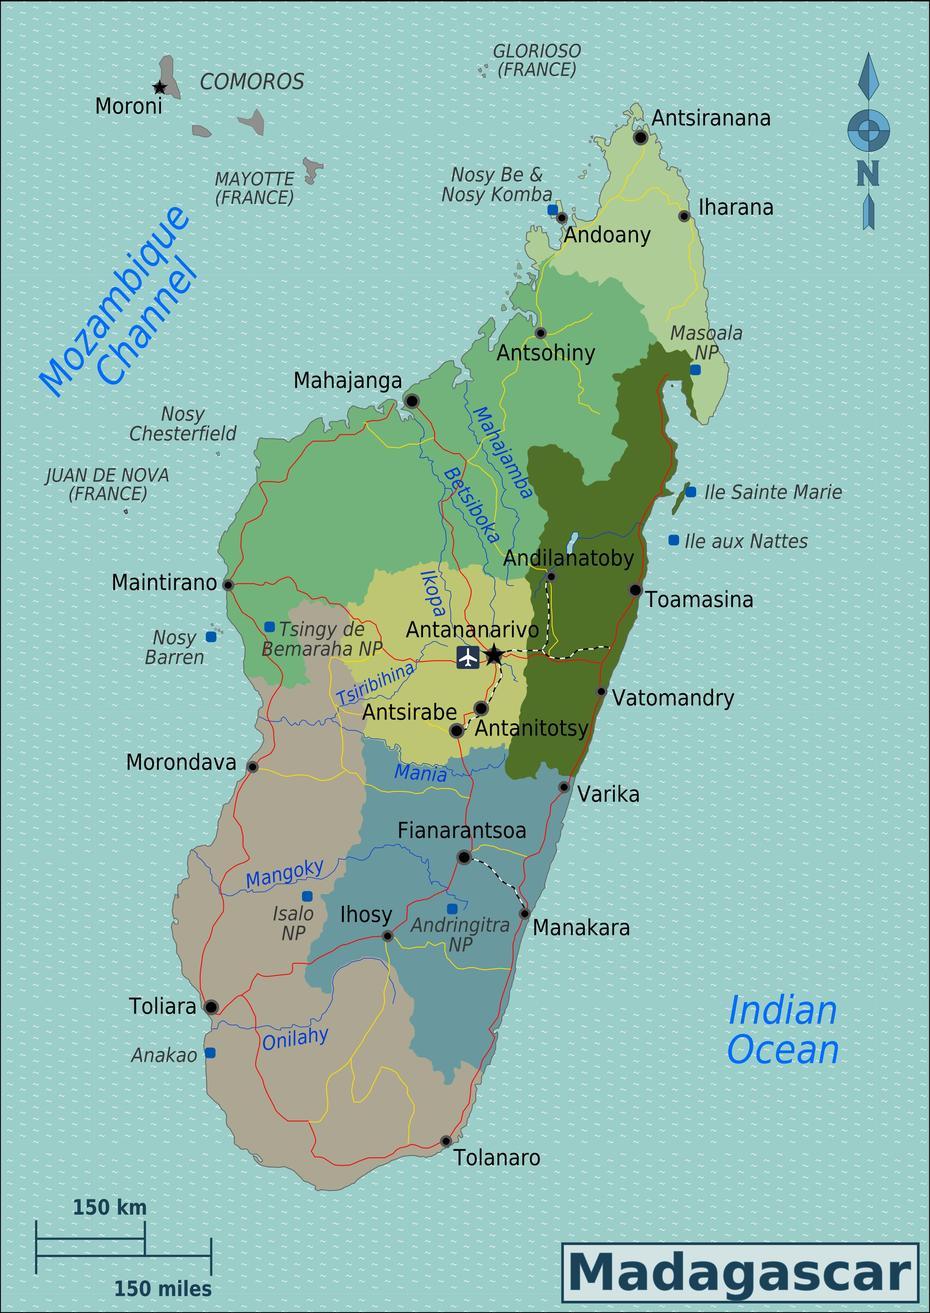 Madagascar Country, Madagascar Climate, Overview , Ambinanisakana, Madagascar